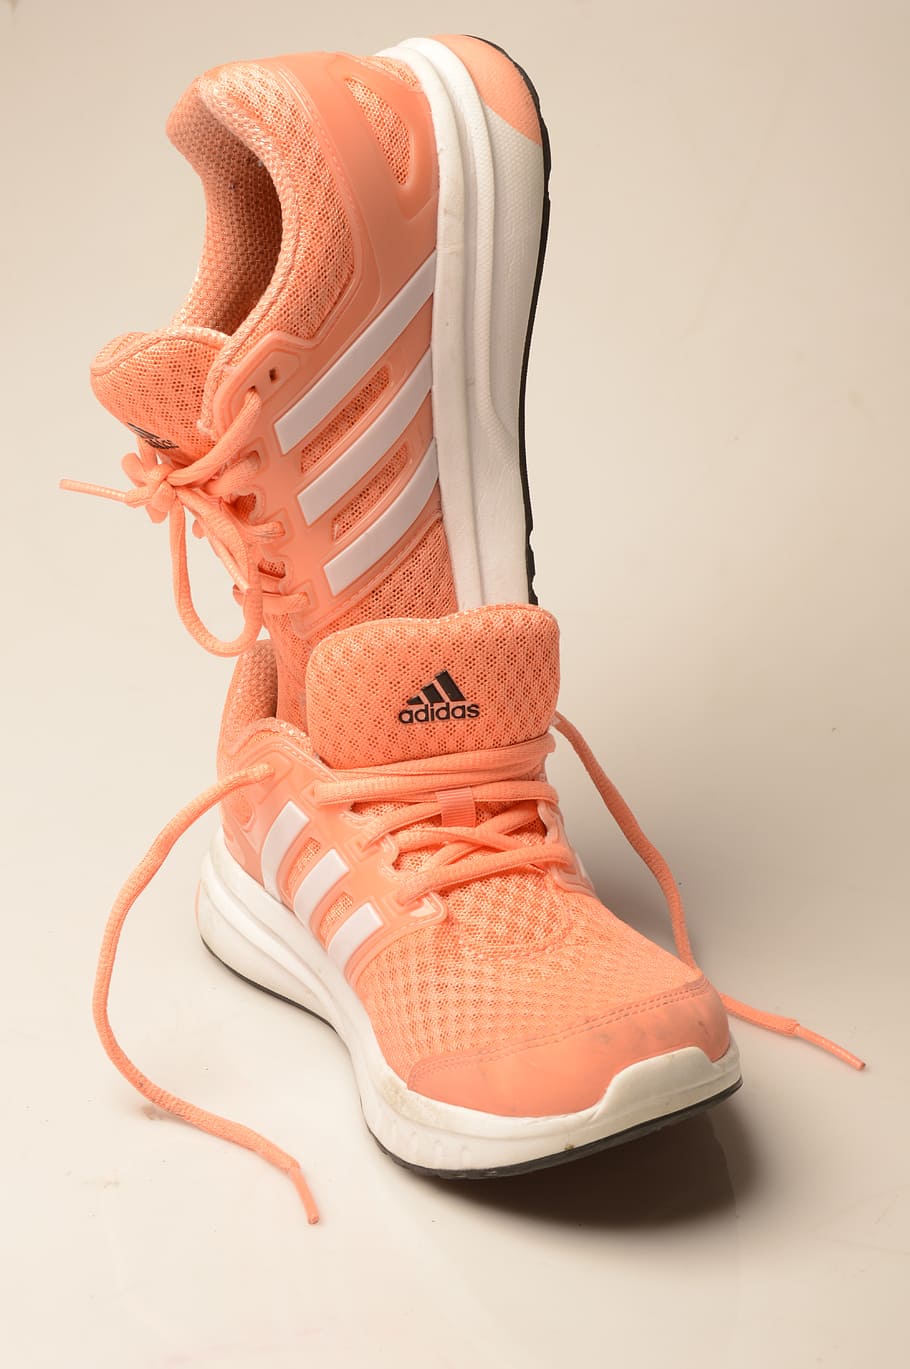 sports, brand adidas, still life, indoors, studio shot, shoe, white background, orange color, close-up, pair